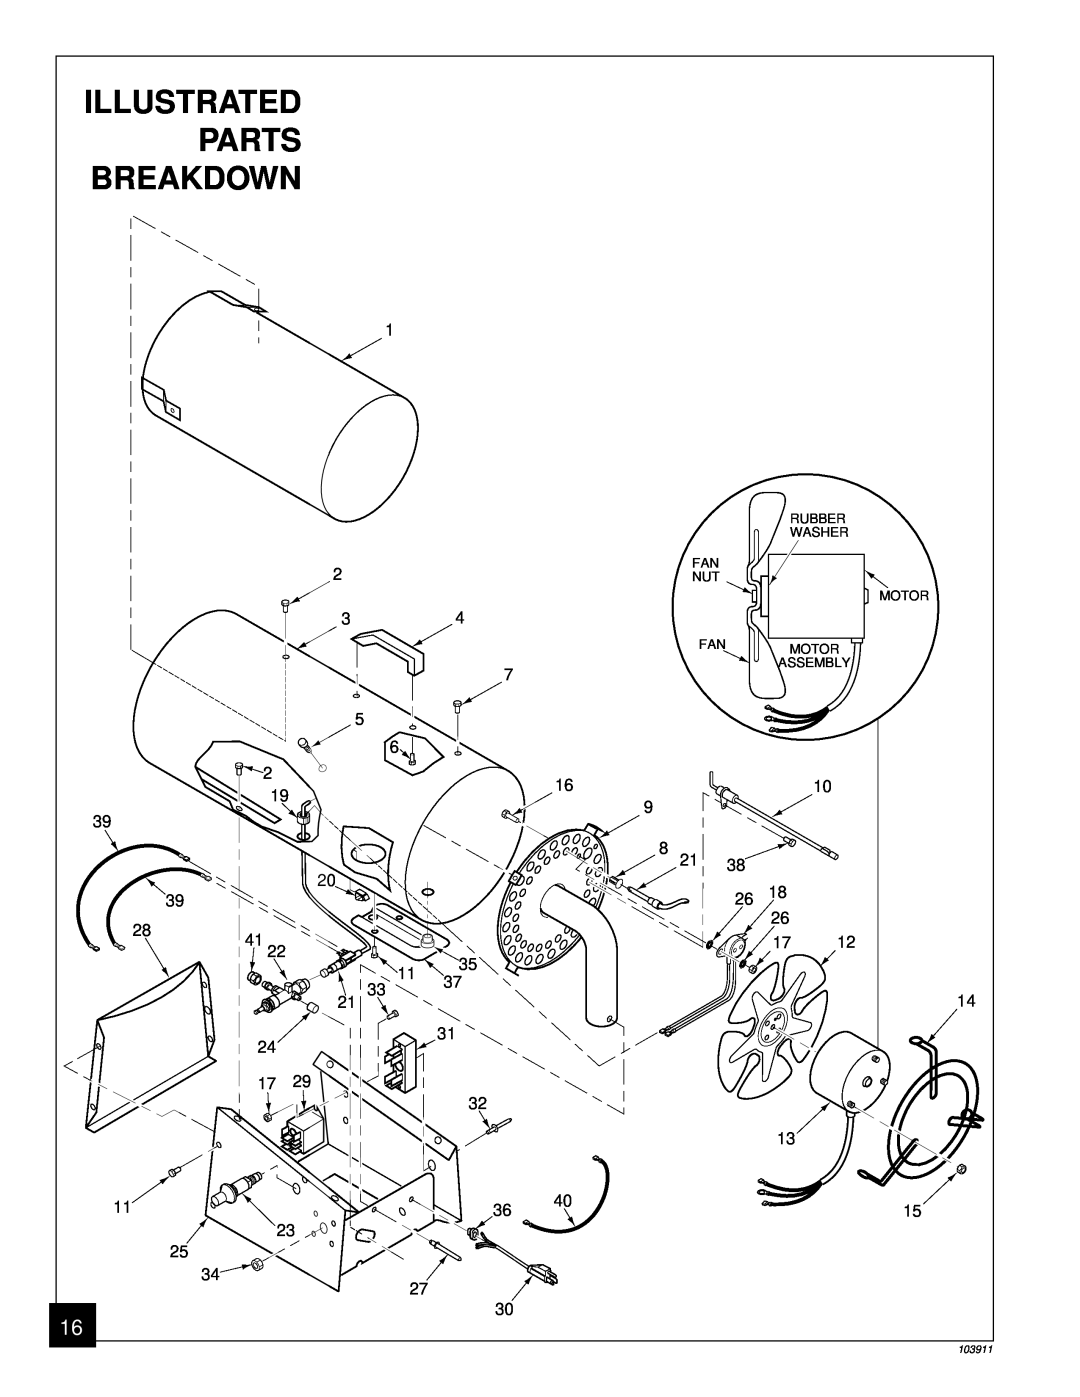 Desa RCLP50B owner manual Illustrated, Parts, Breakdown, Rubber, Washer, Motor 